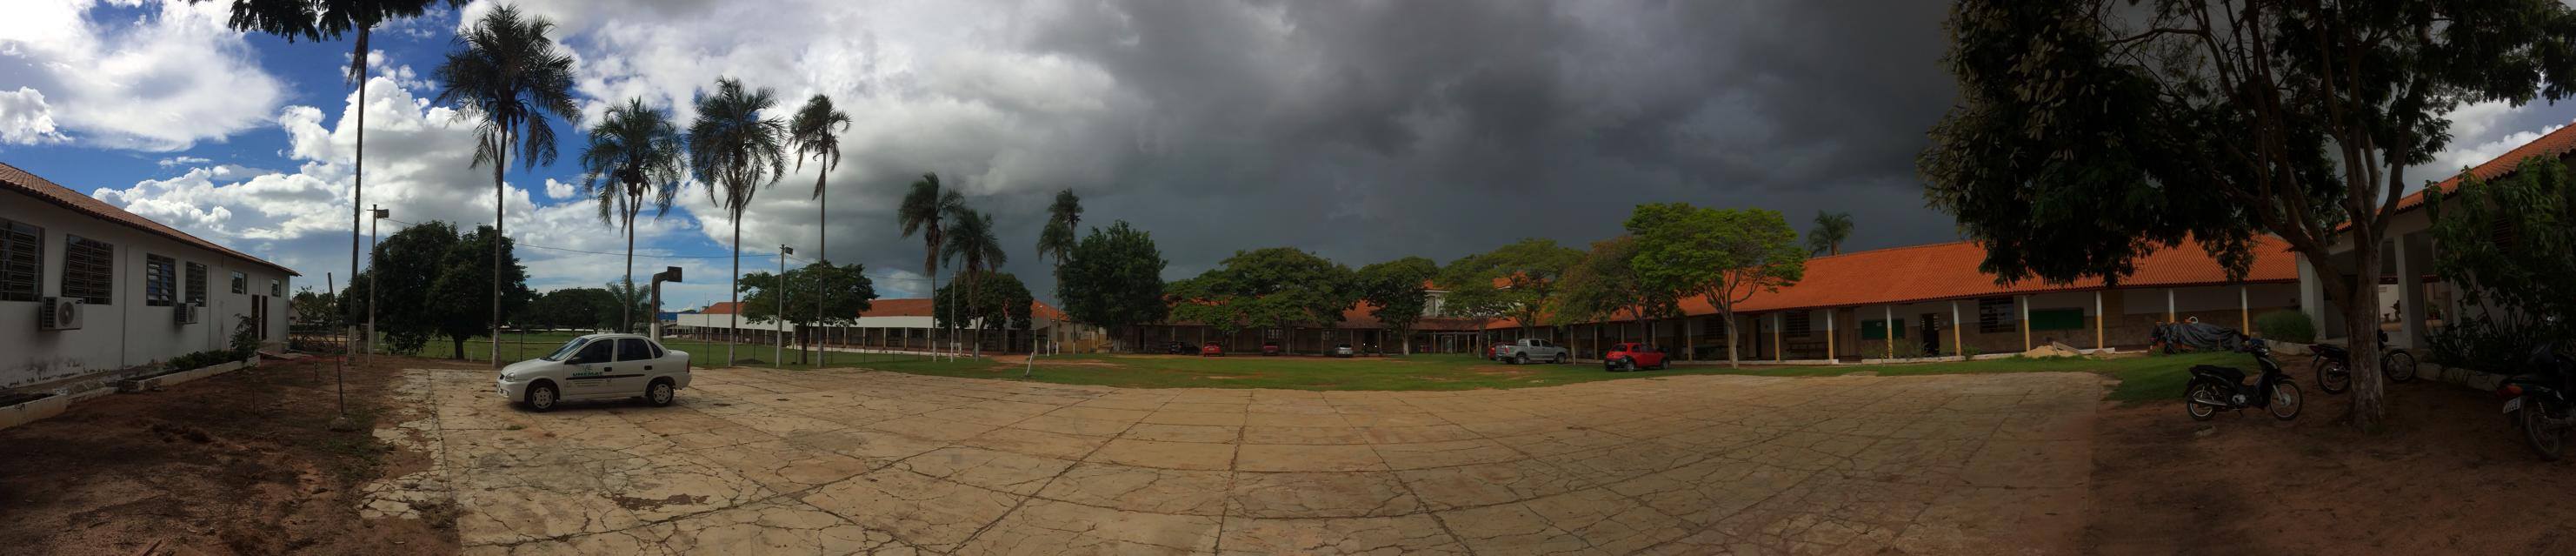 UNEMAT, State University of Mato Grosso, Brazil